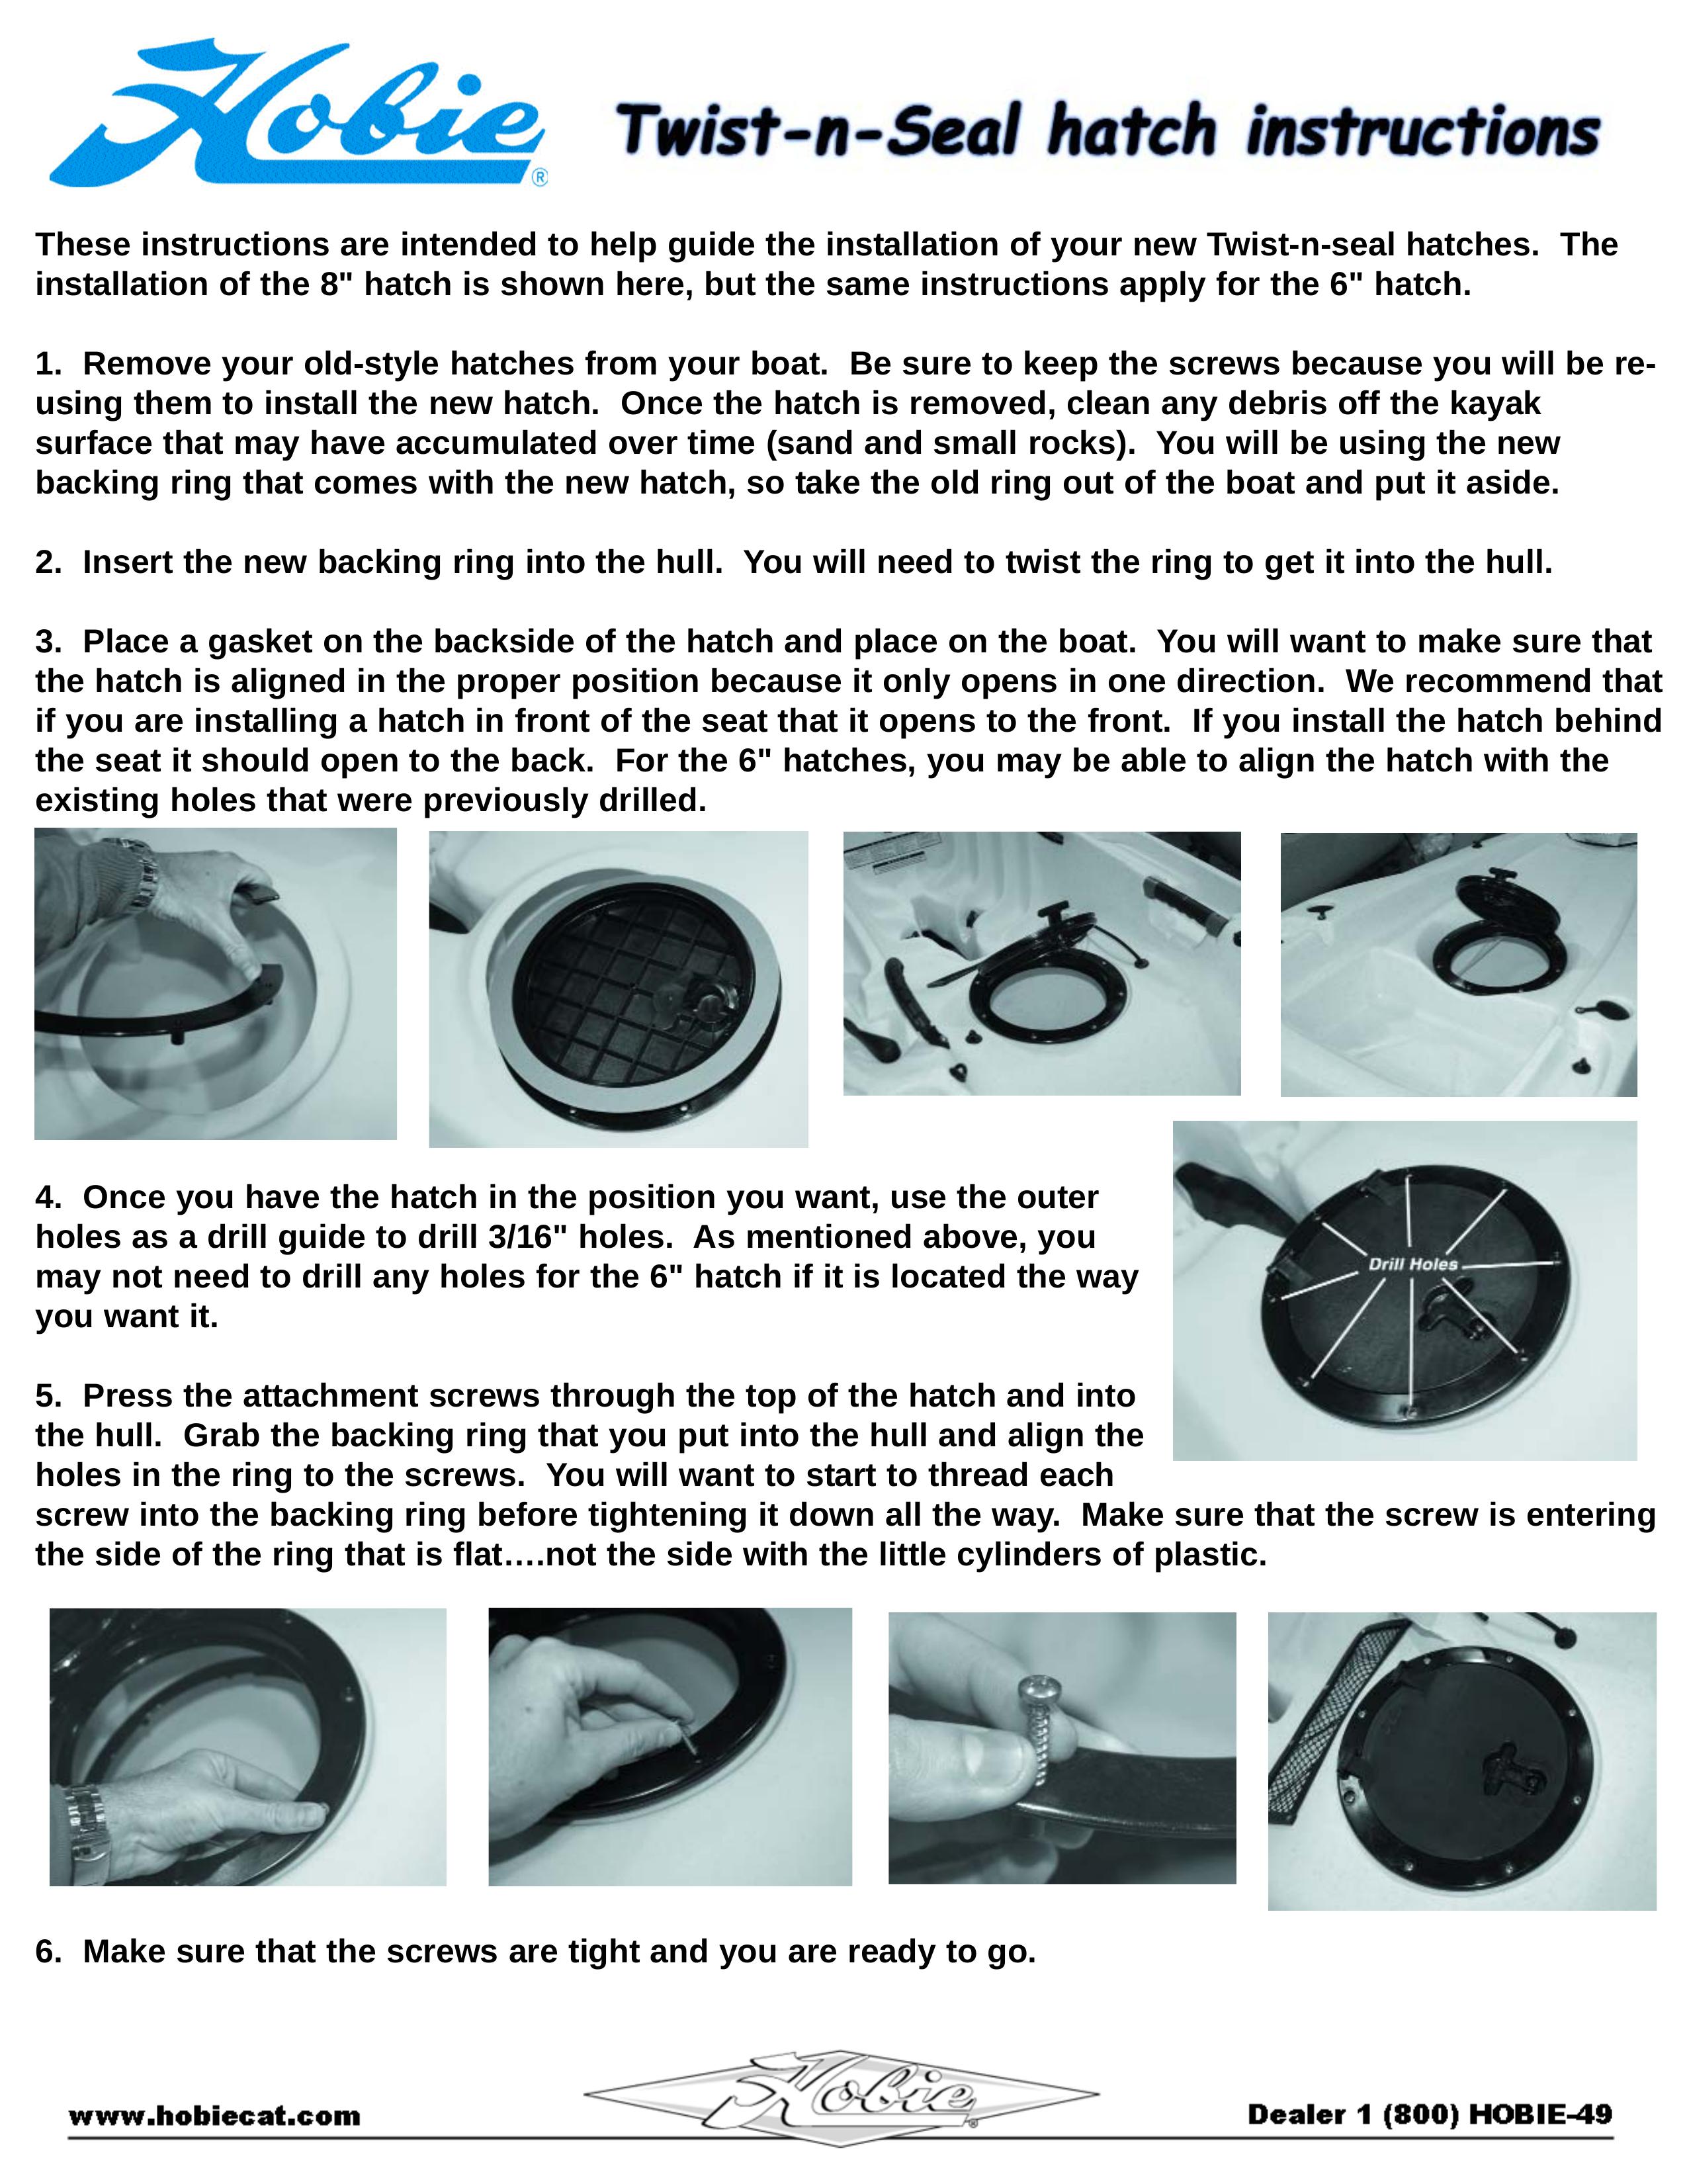 Hobie Twist-n-Seal Hatch Boating Equipment User Manual